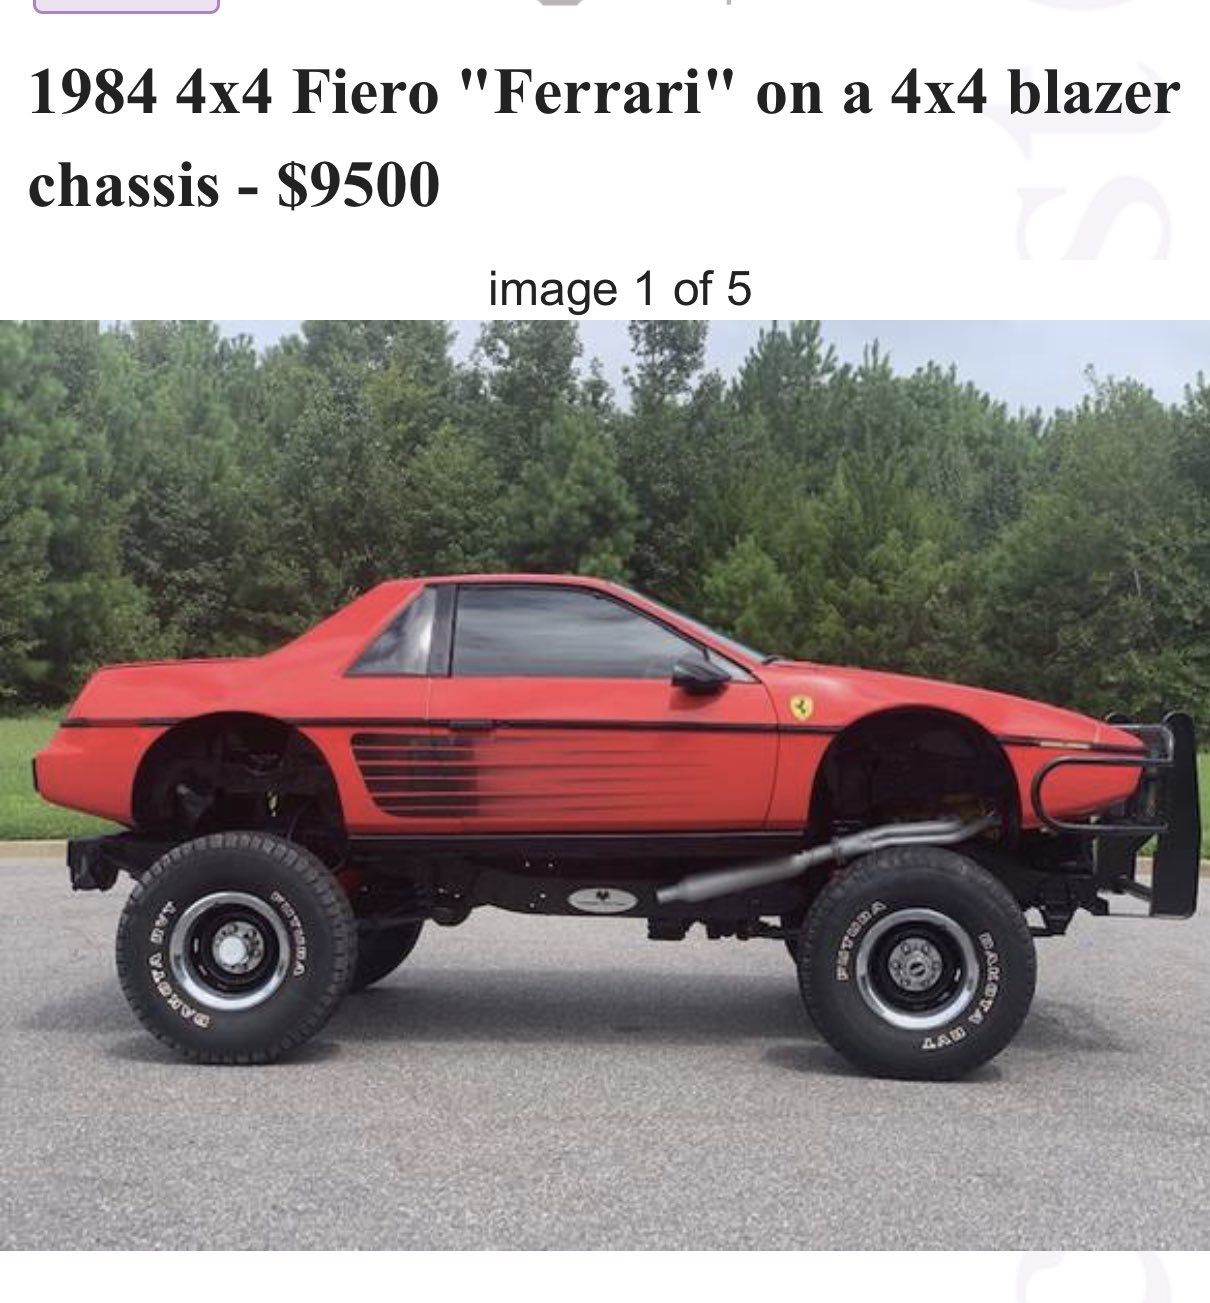 lifted chevy blazer - 1984 4x4 Fiero "Ferrari" on a 4x4 blazer chassis $9500 image 1 of 5 40